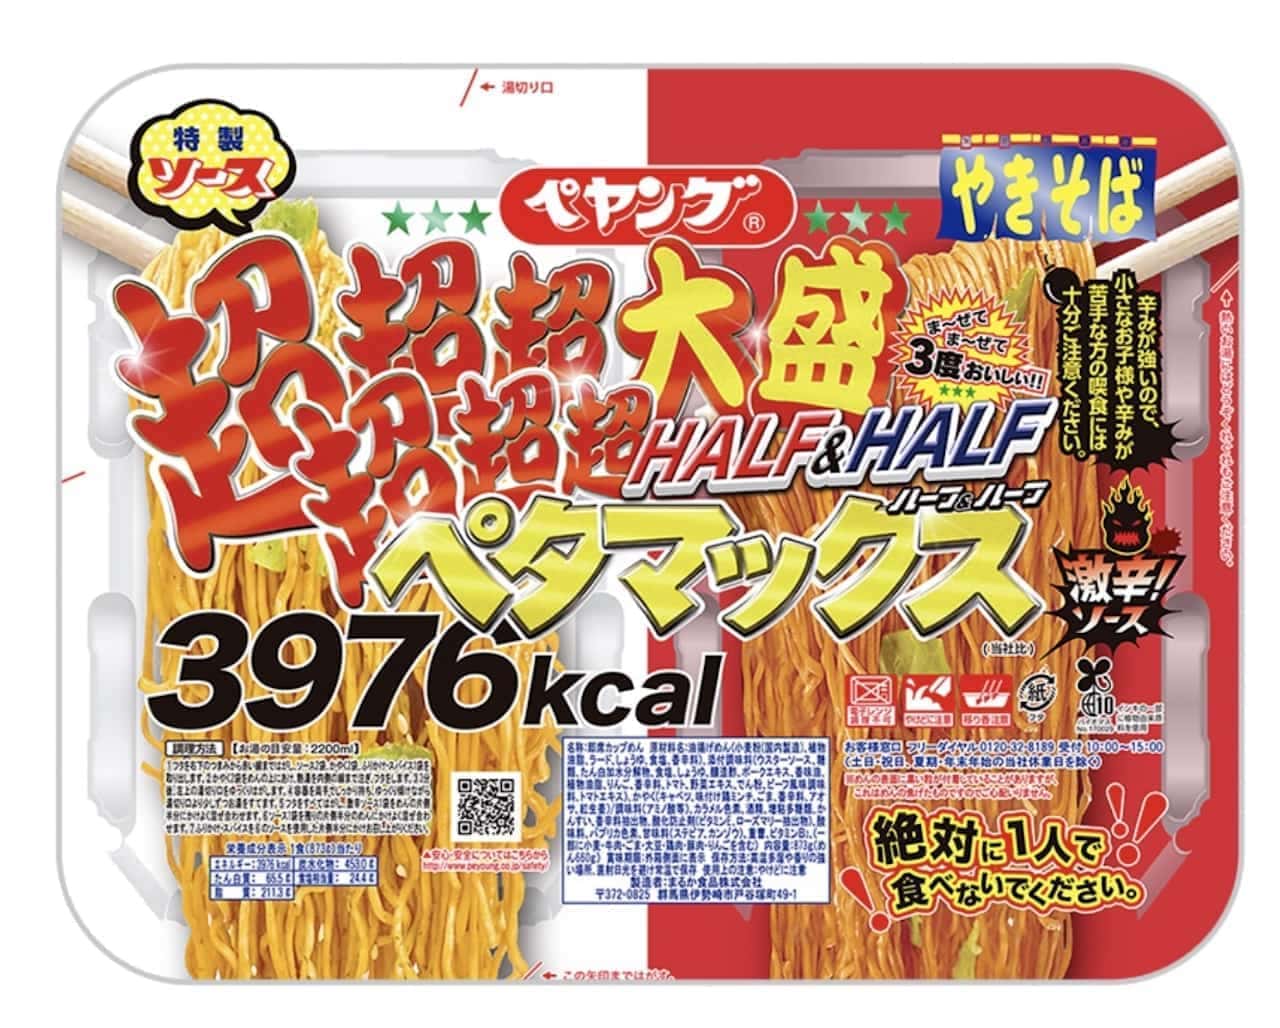 Peyoung Super Cho-Cho-Cho-Daisy Yakisoba Petamax Half & Half Geki-Hot" from Maruka Foods 